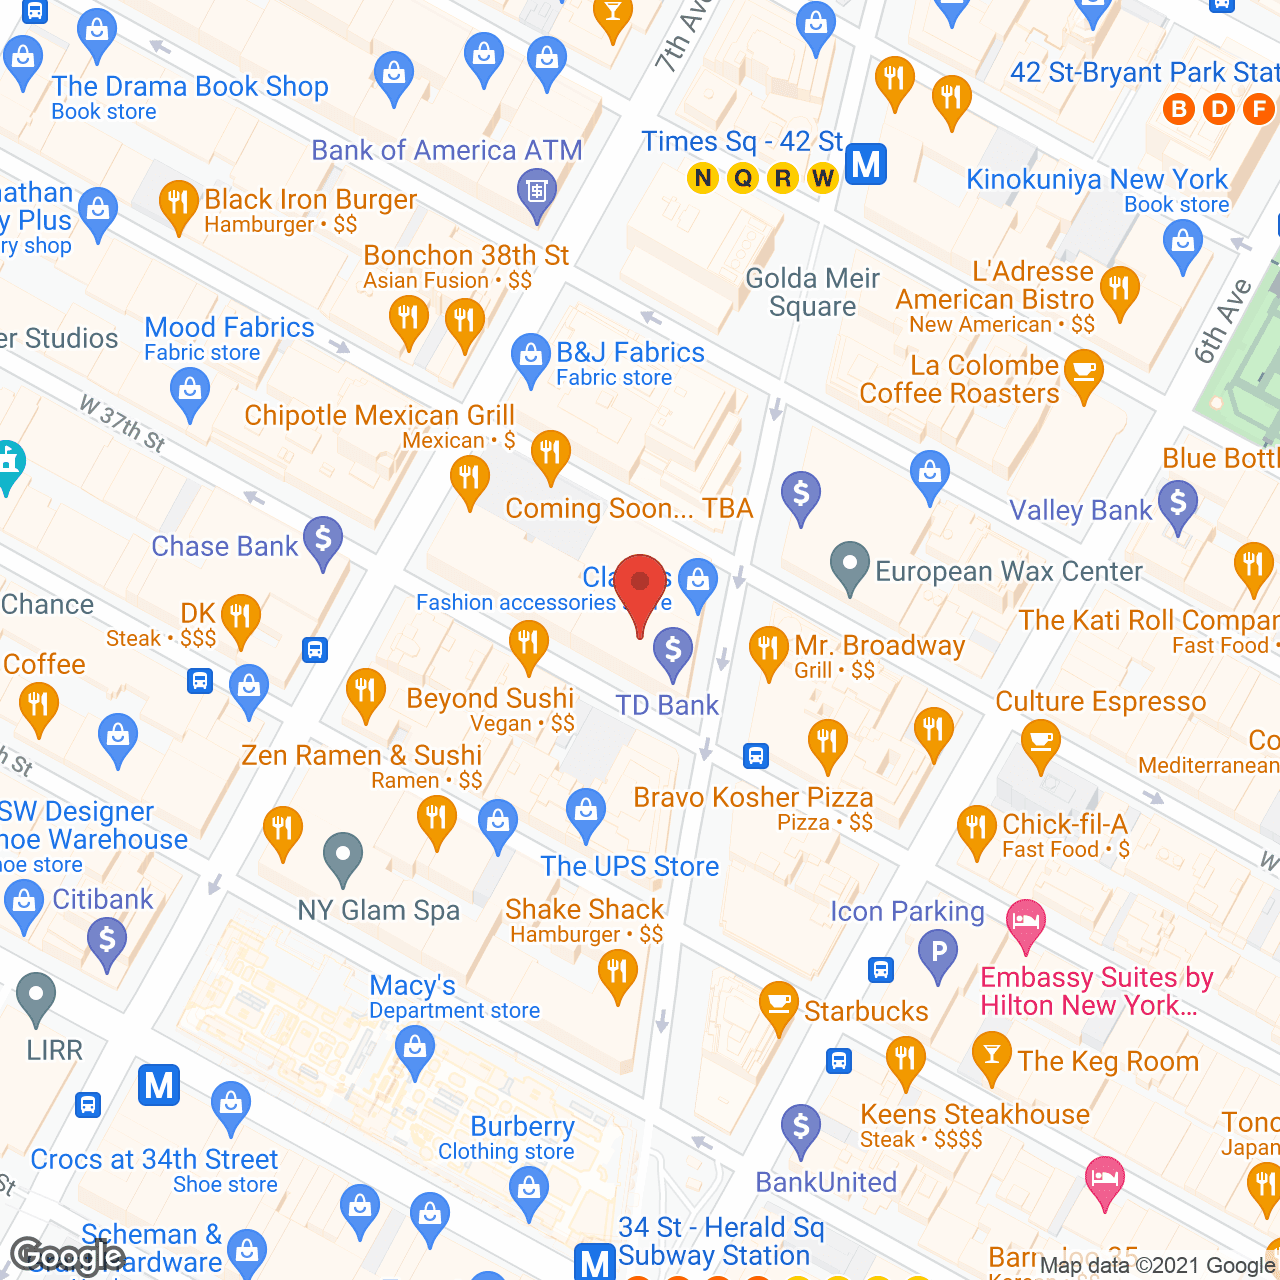 City Home Companion in google map